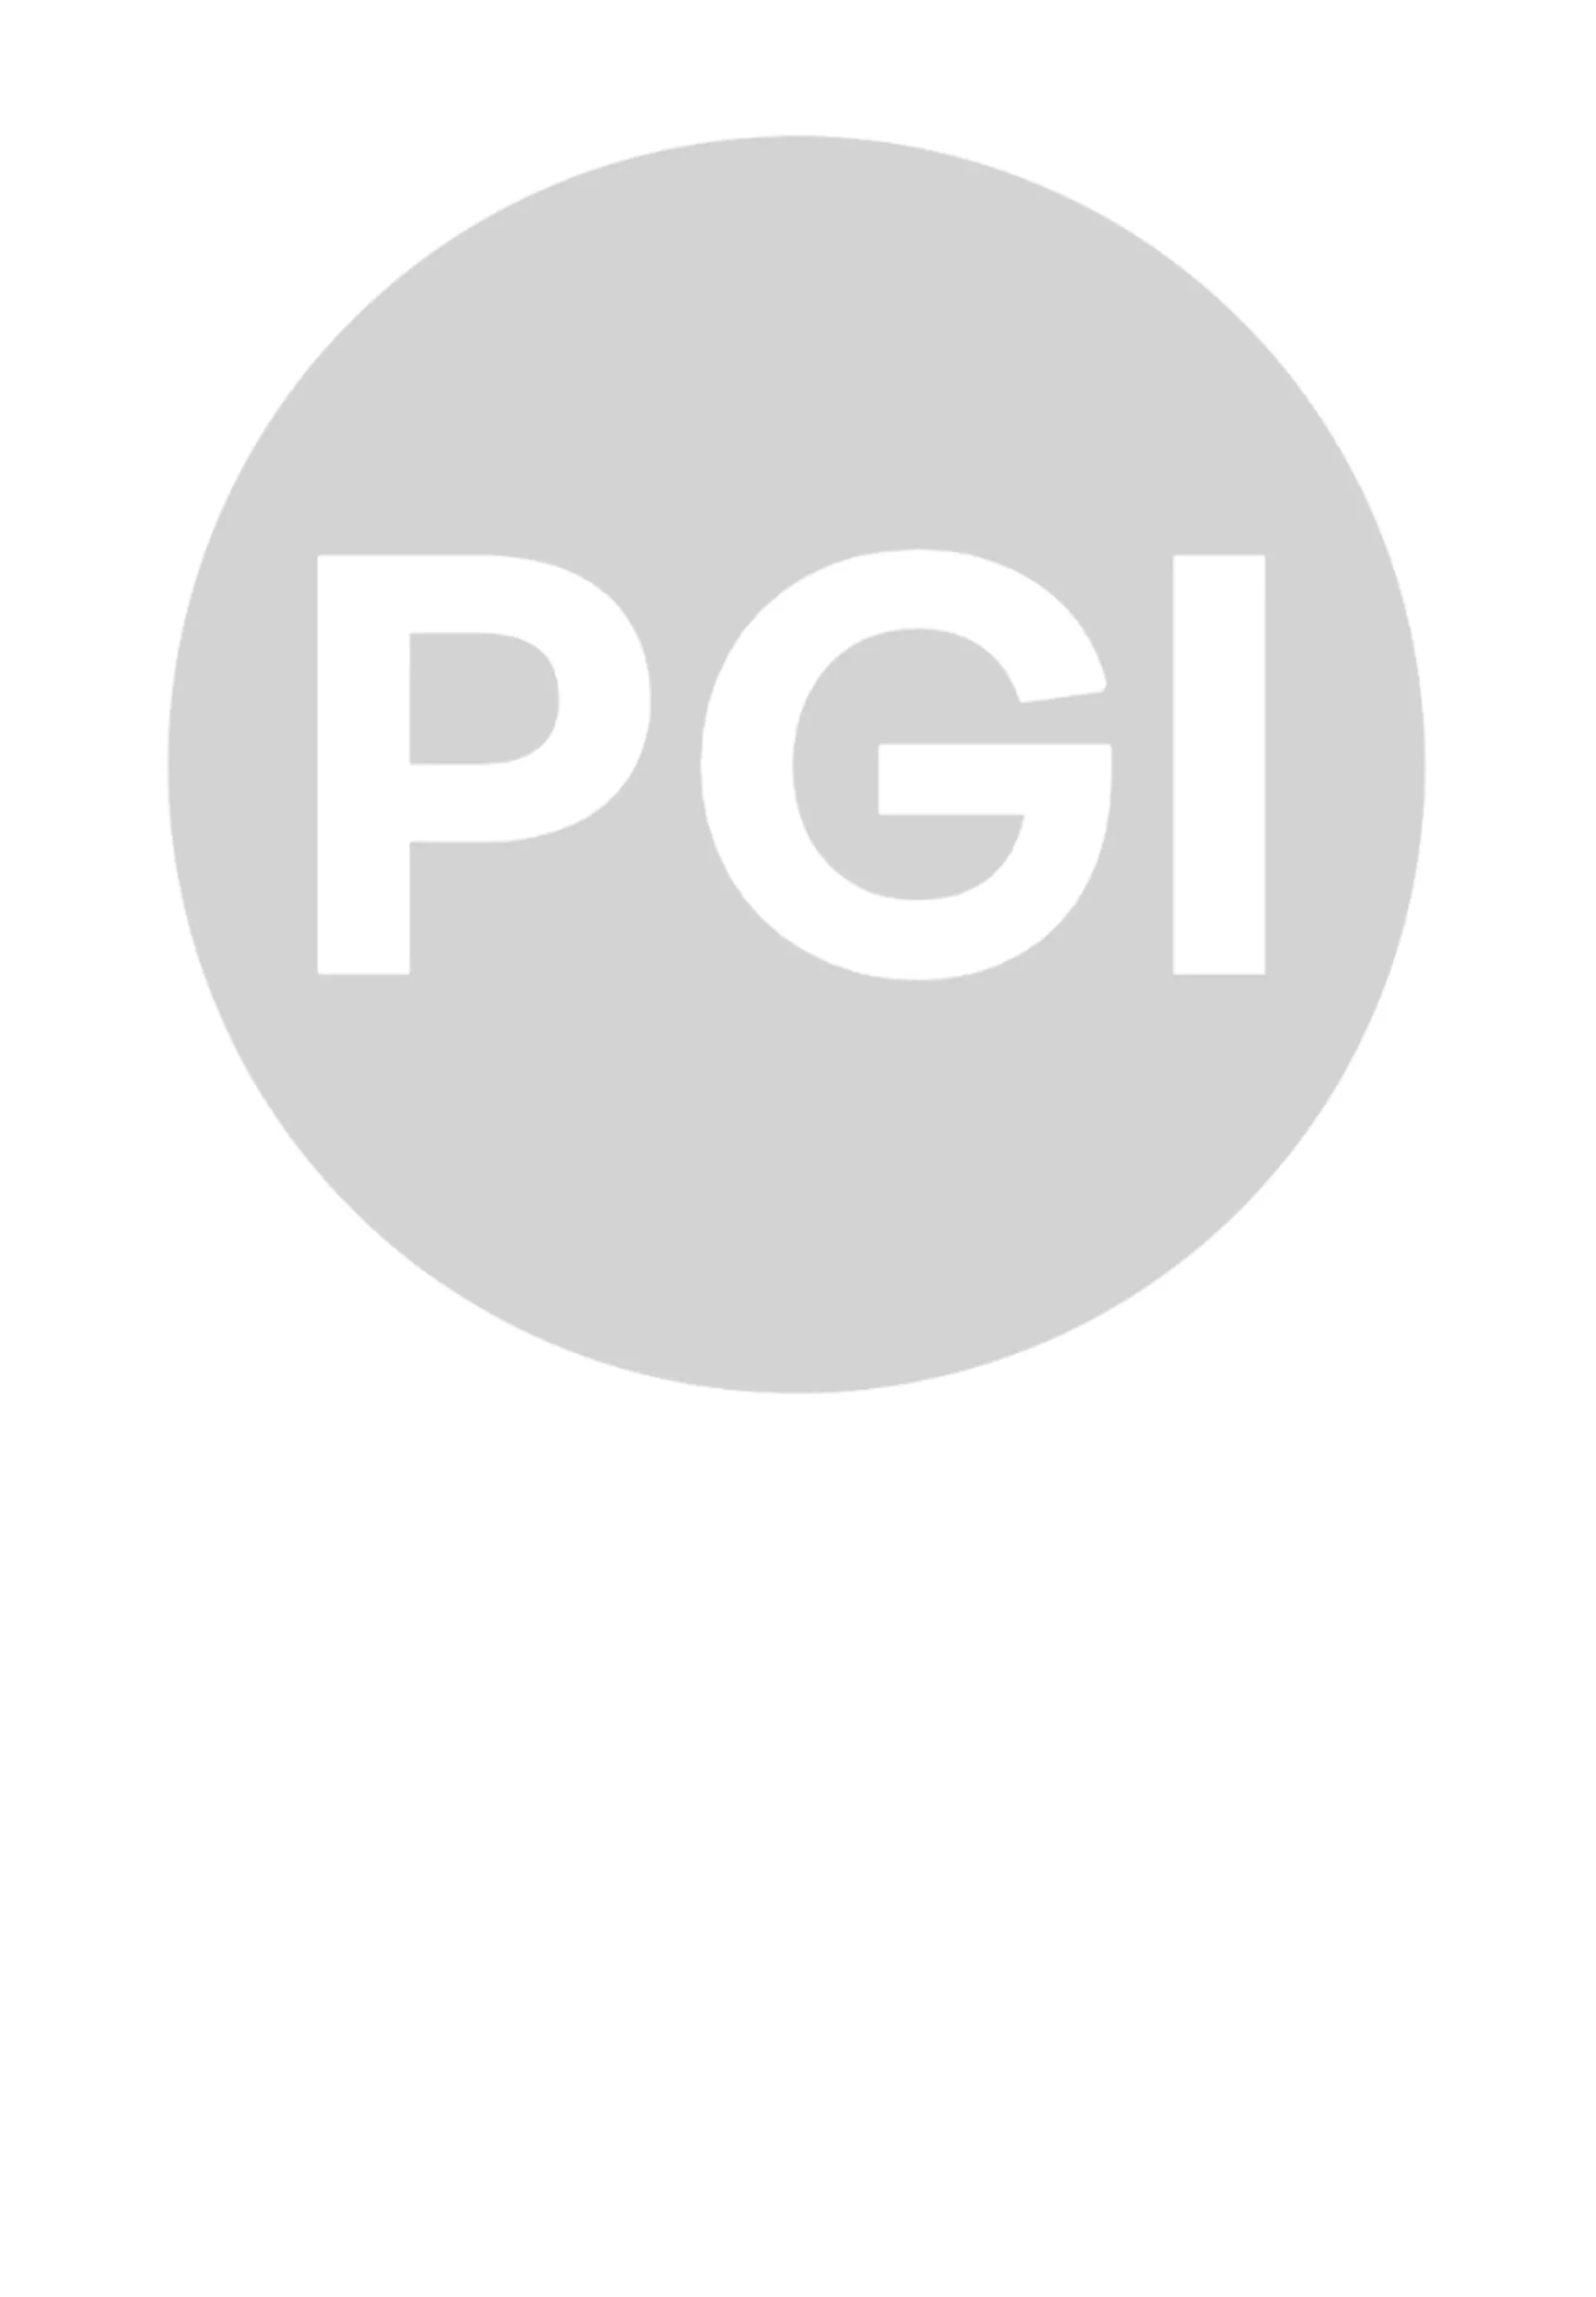 Pgi grey portrait1